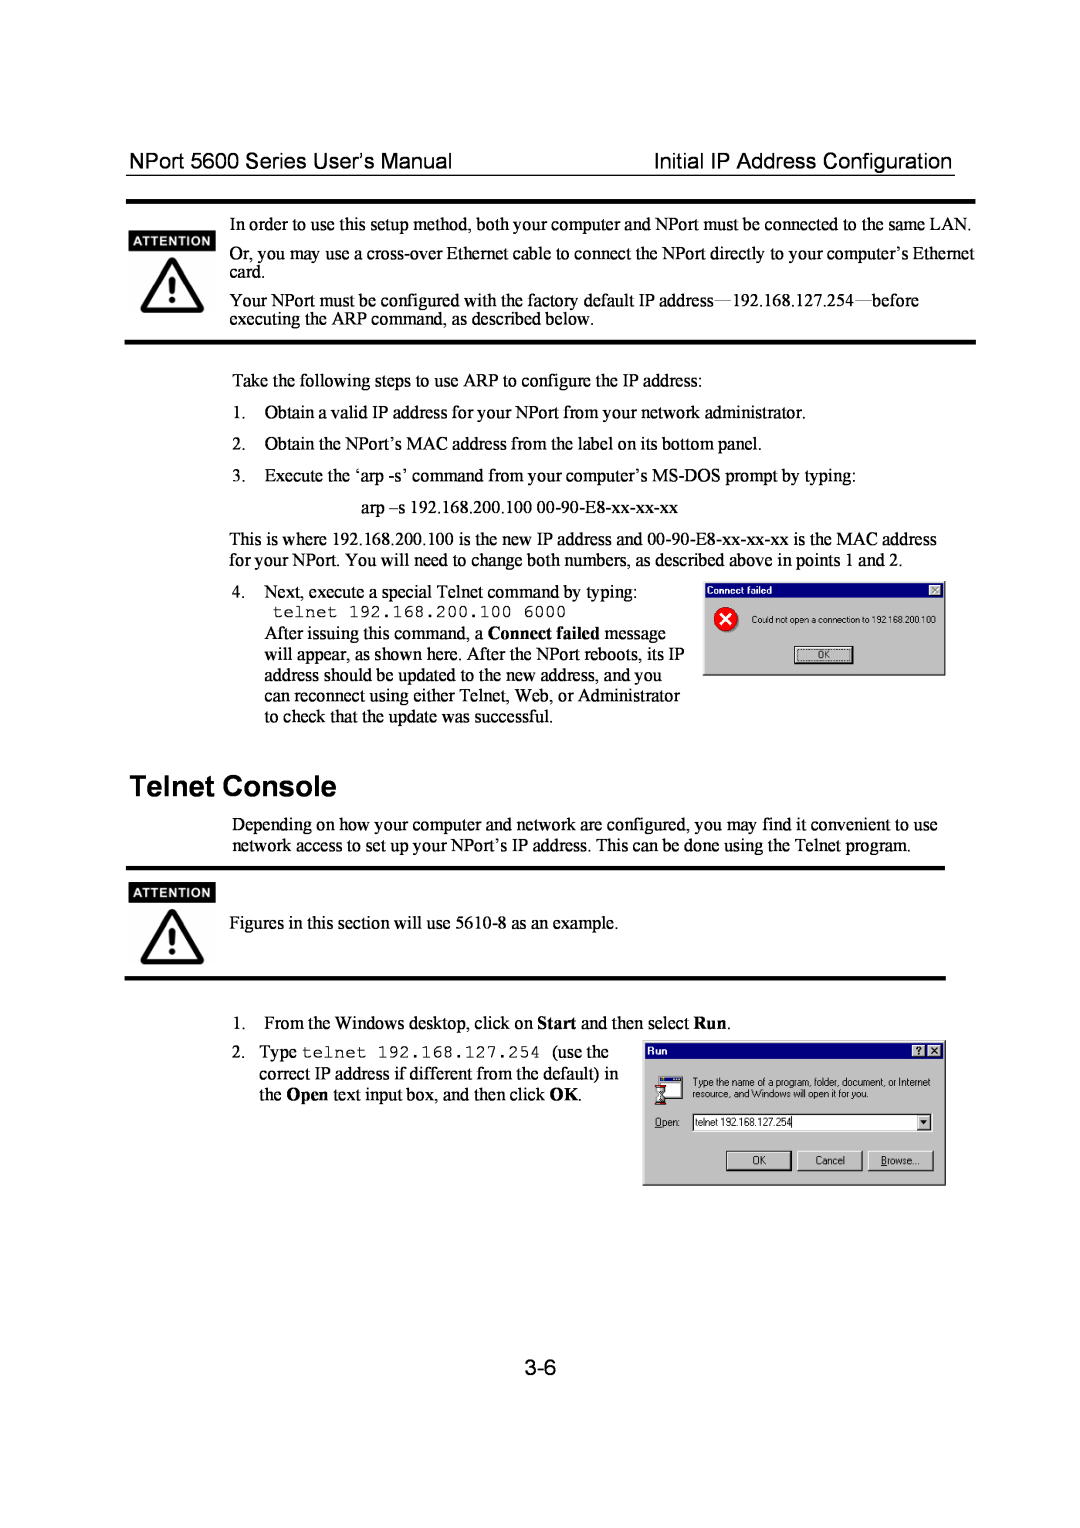 Moxa Technologies user manual Telnet Console, NPort 5600 Series User’s Manual, Initial IP Address Configuration 